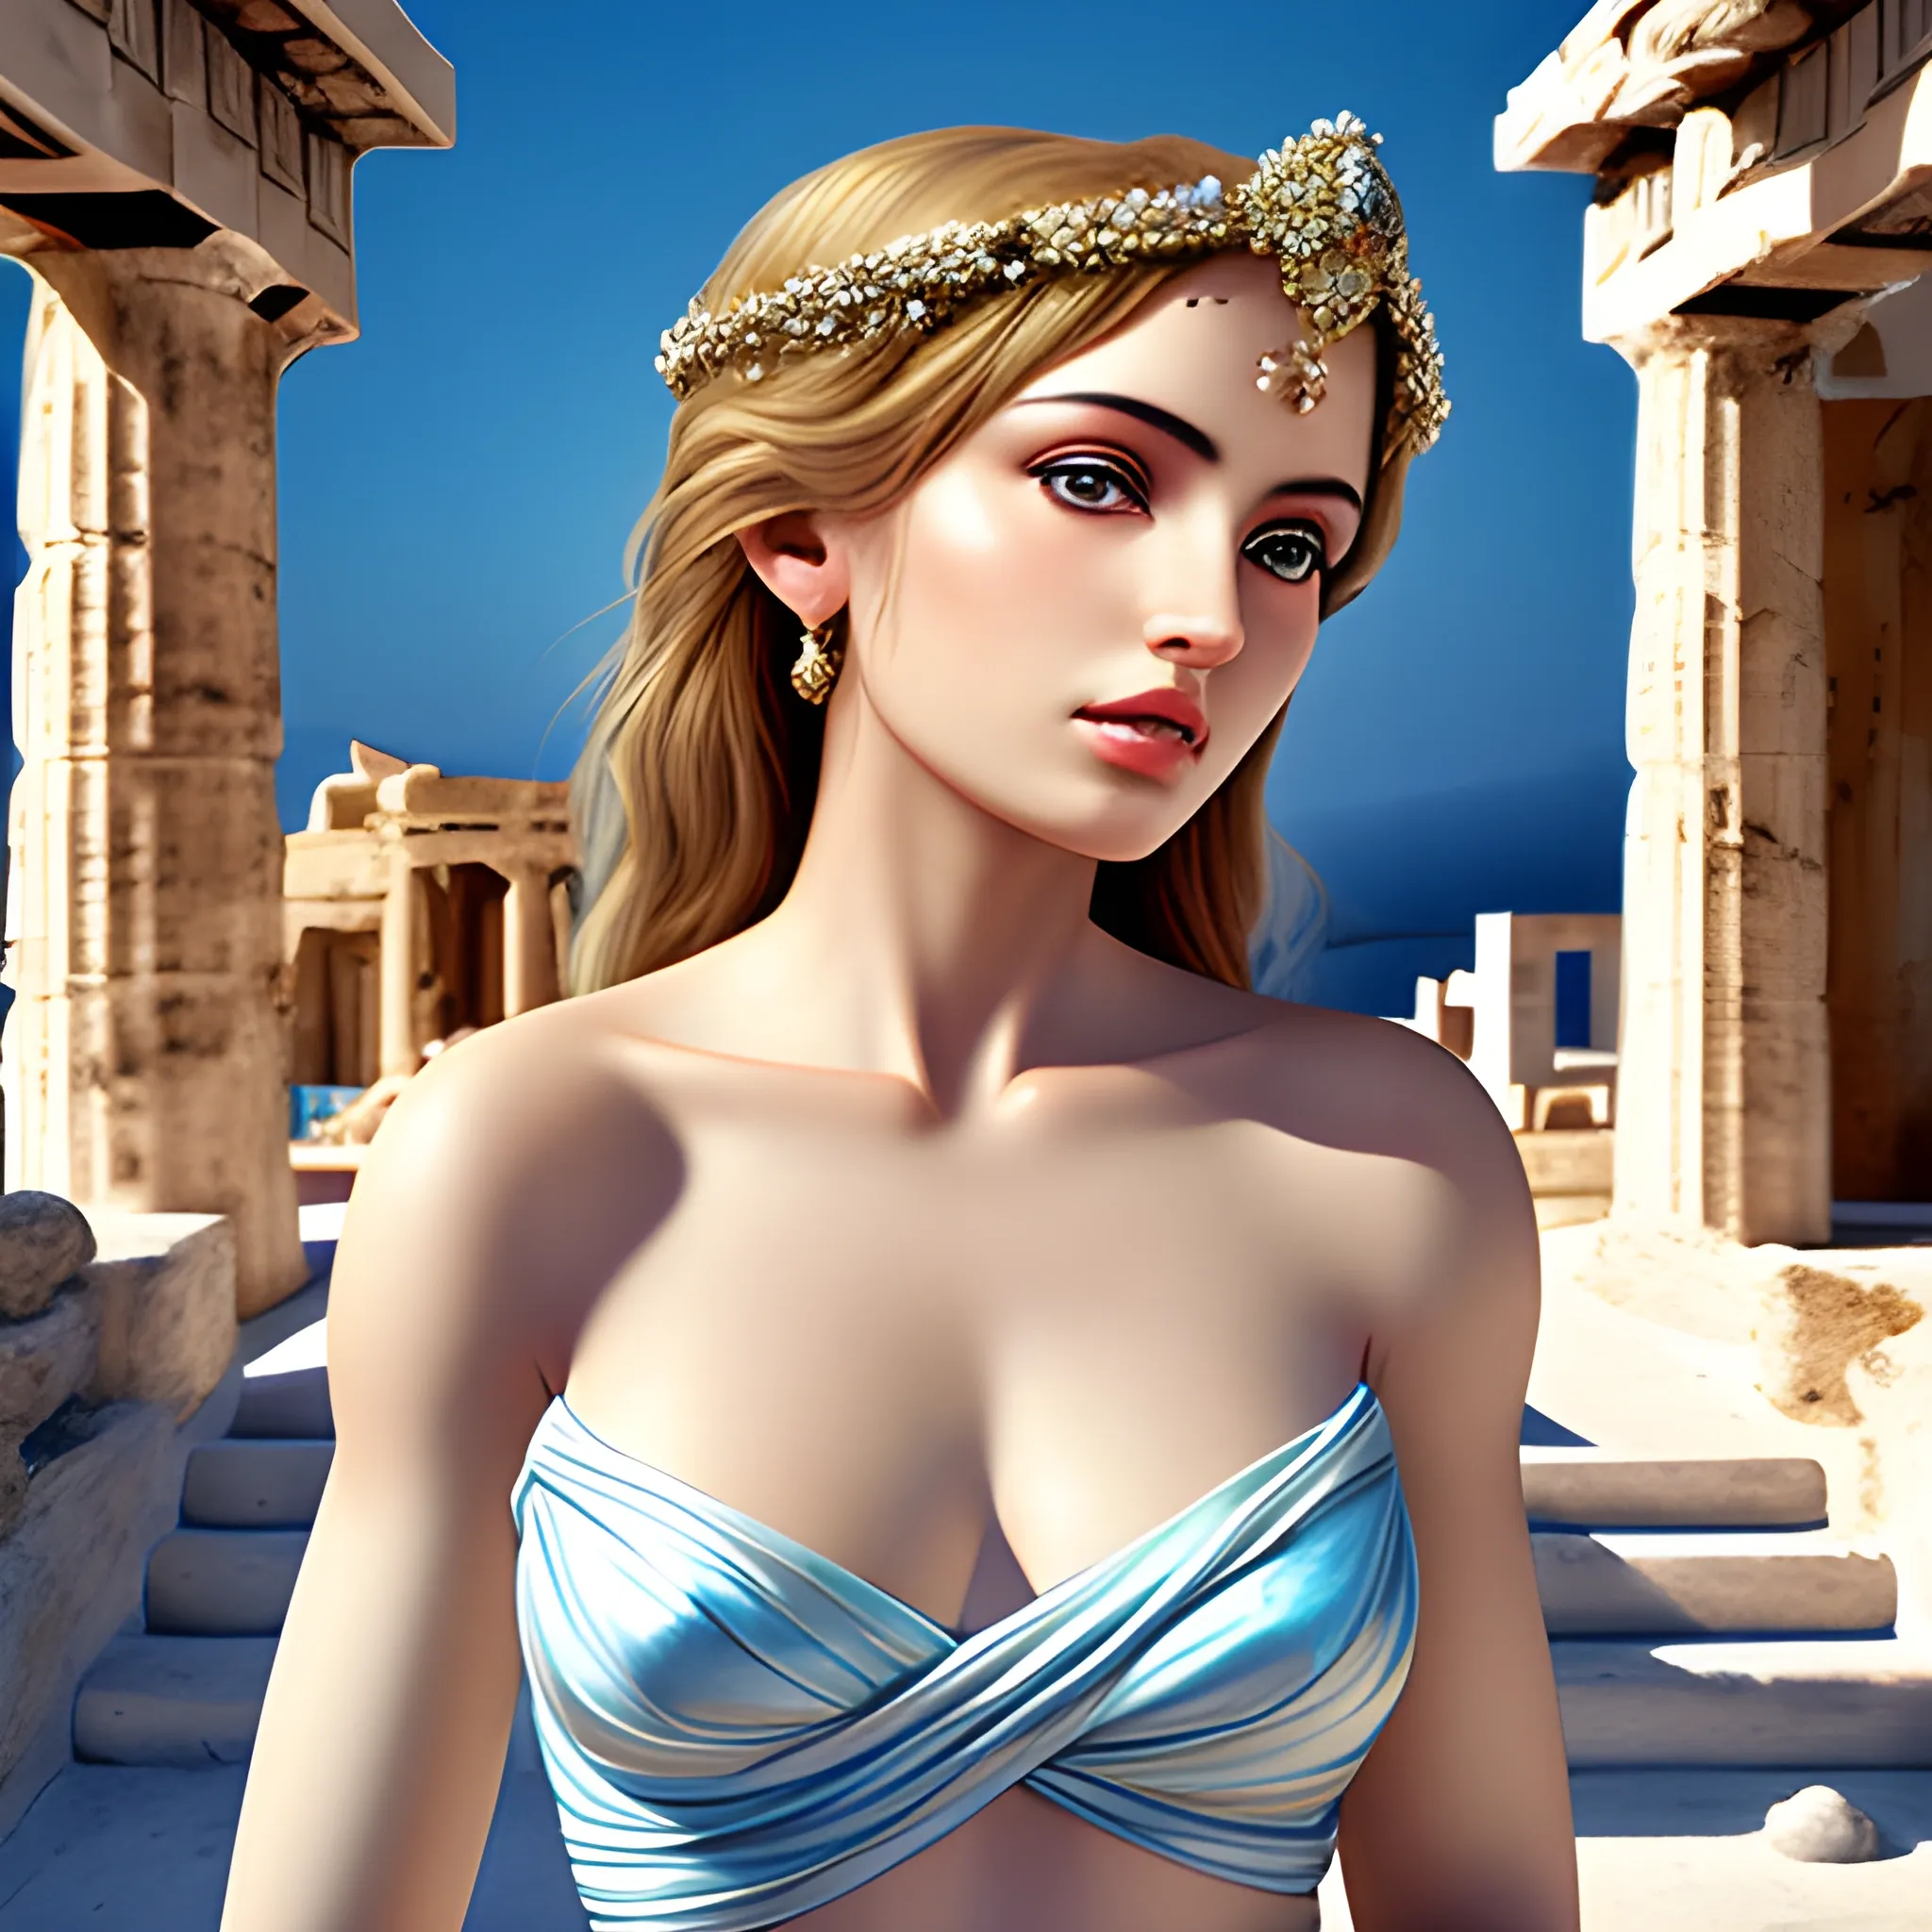 Exotic ethereal beautiful greek goddess, photorealist